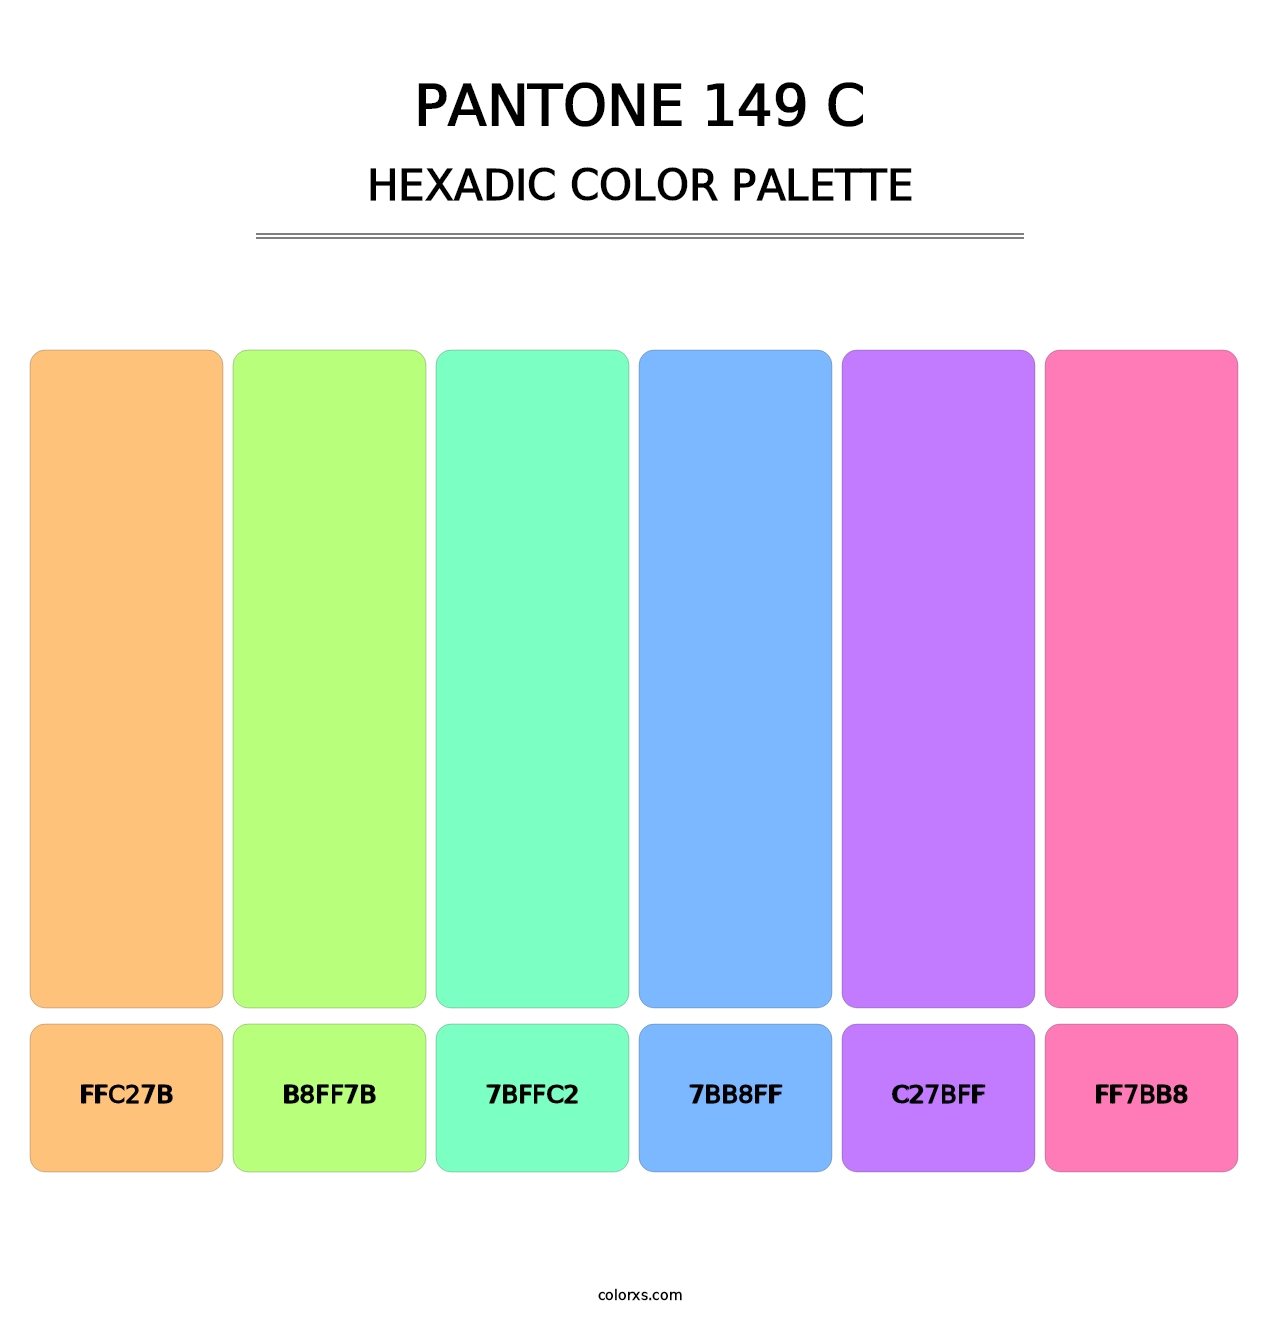 PANTONE 149 C - Hexadic Color Palette